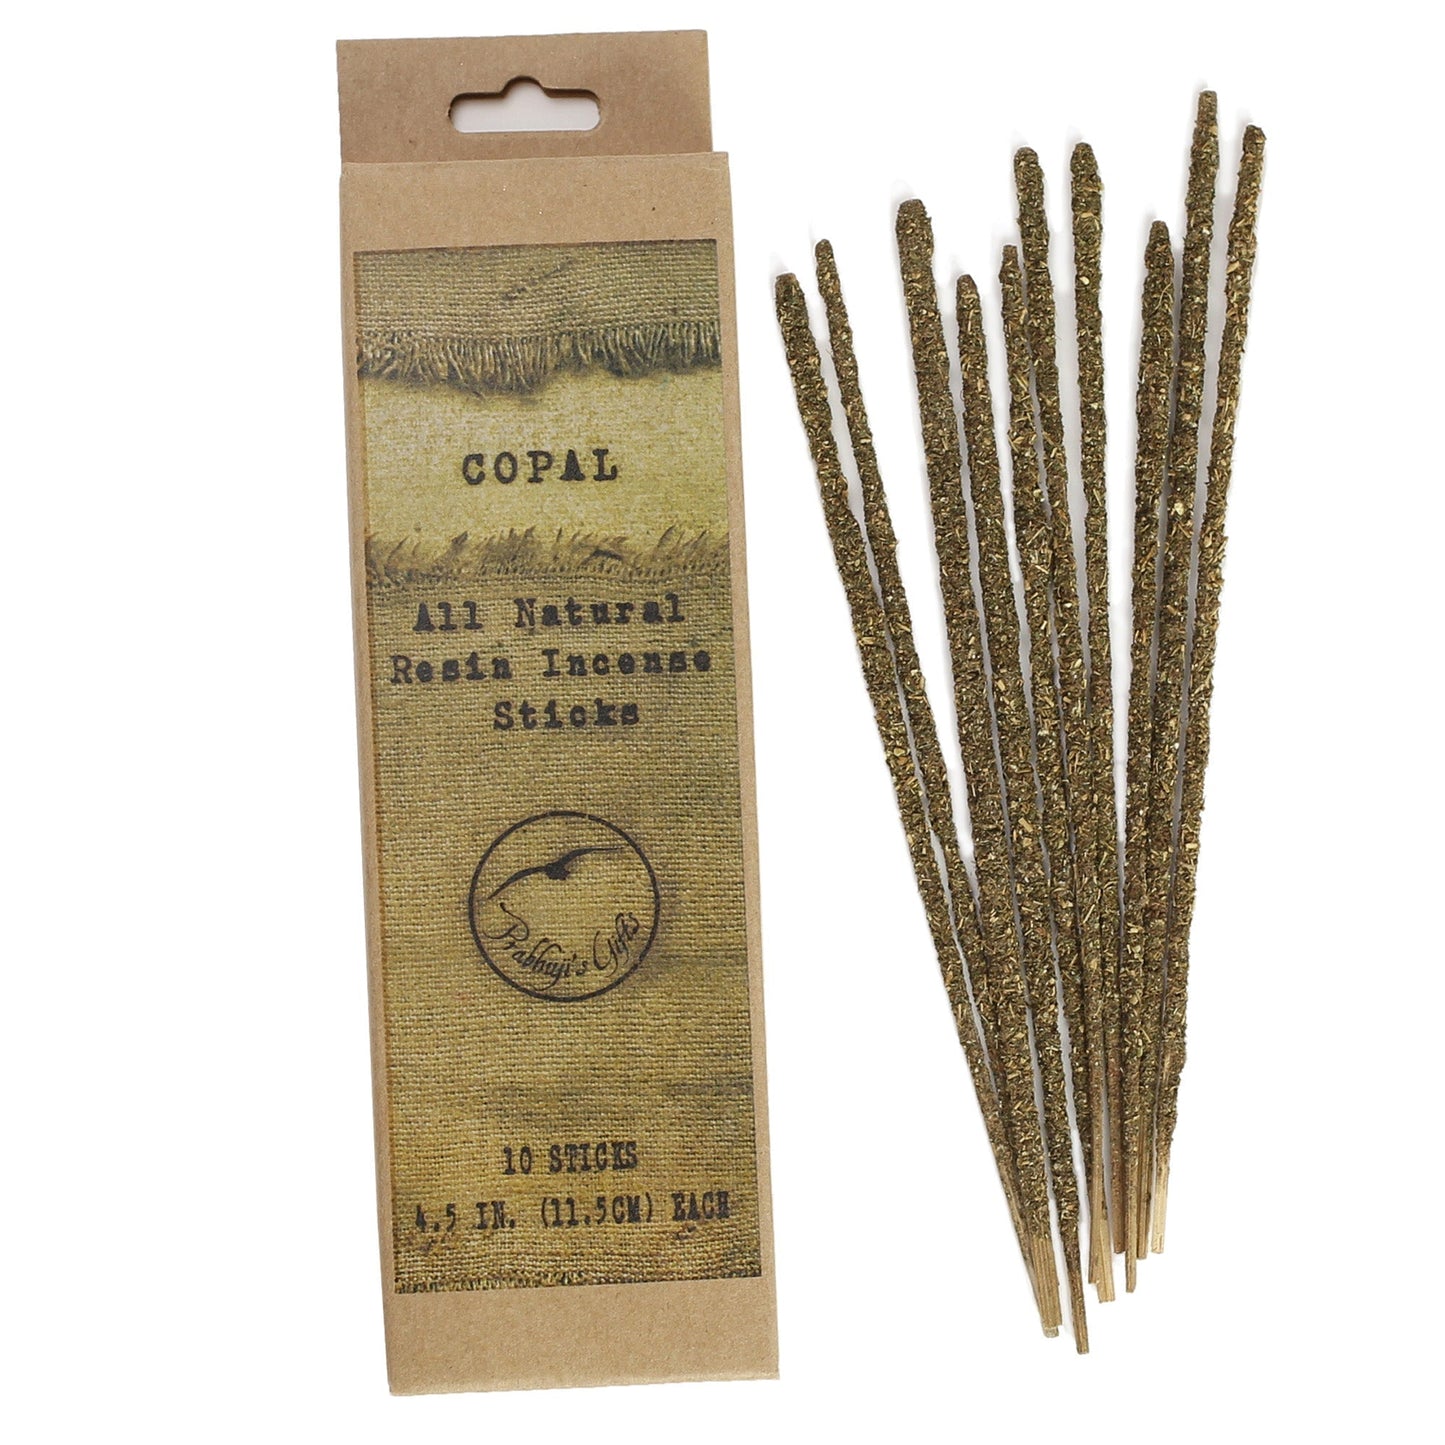 Smudging Incense - Copal - Natural Resin Incense sticks - Tree Spirit Wellness